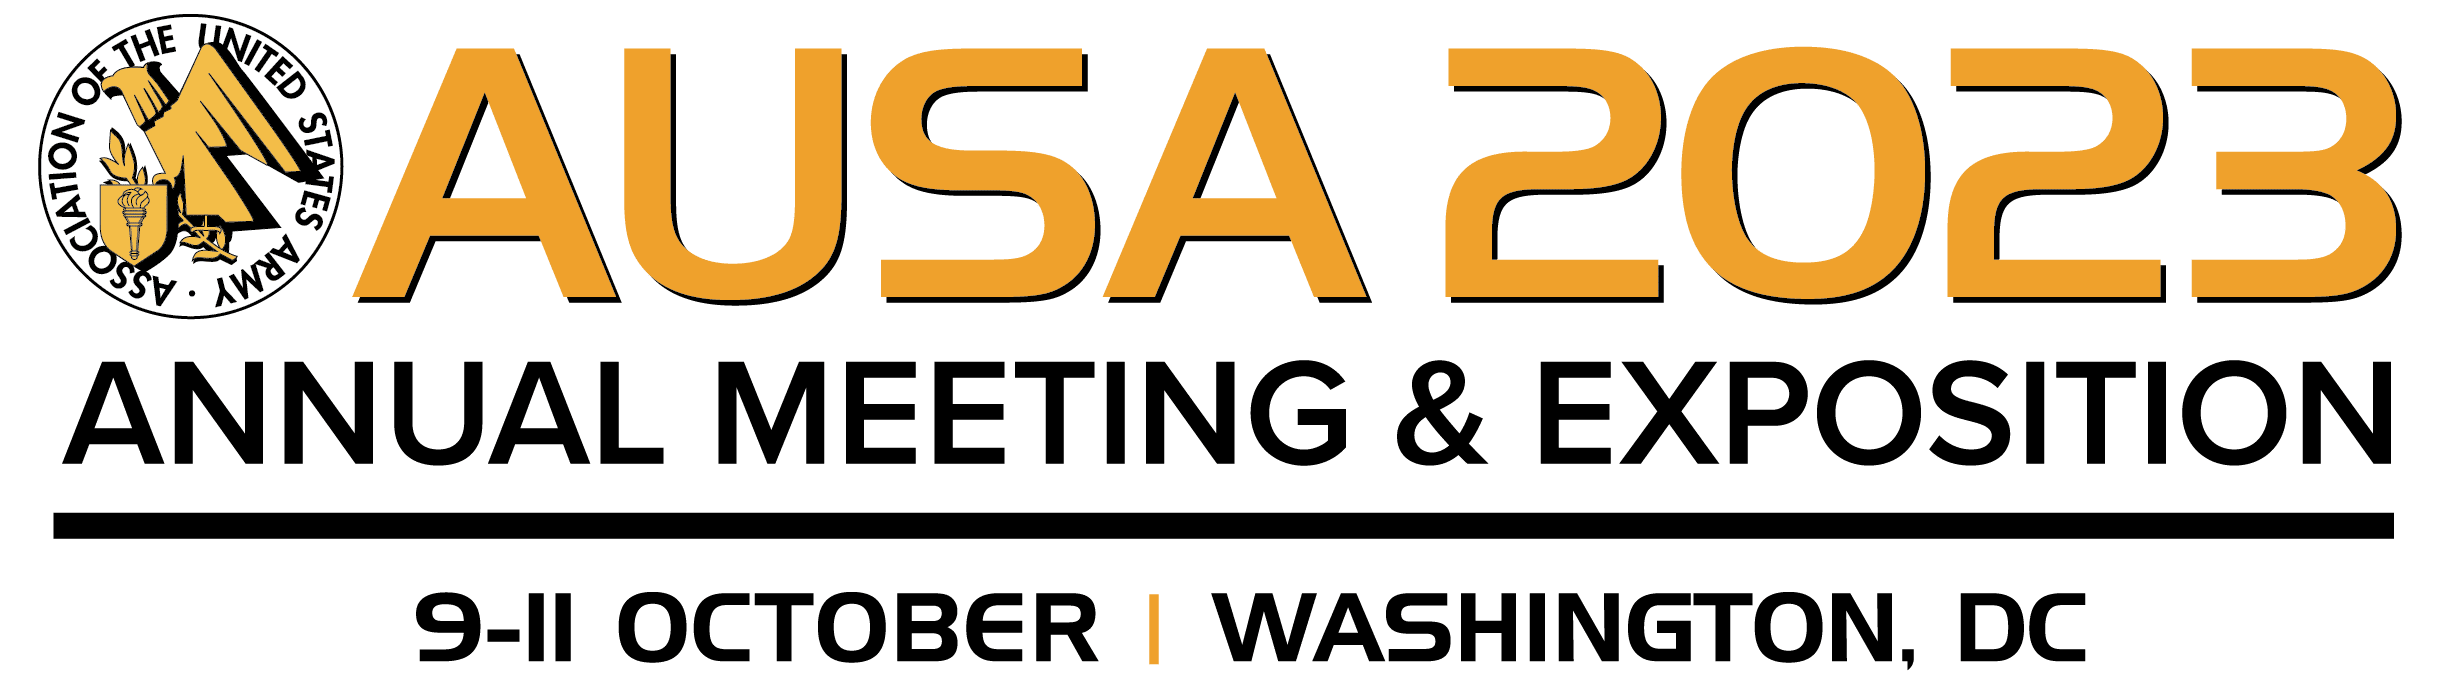 AUSA Annual Meeting & Exposition logo